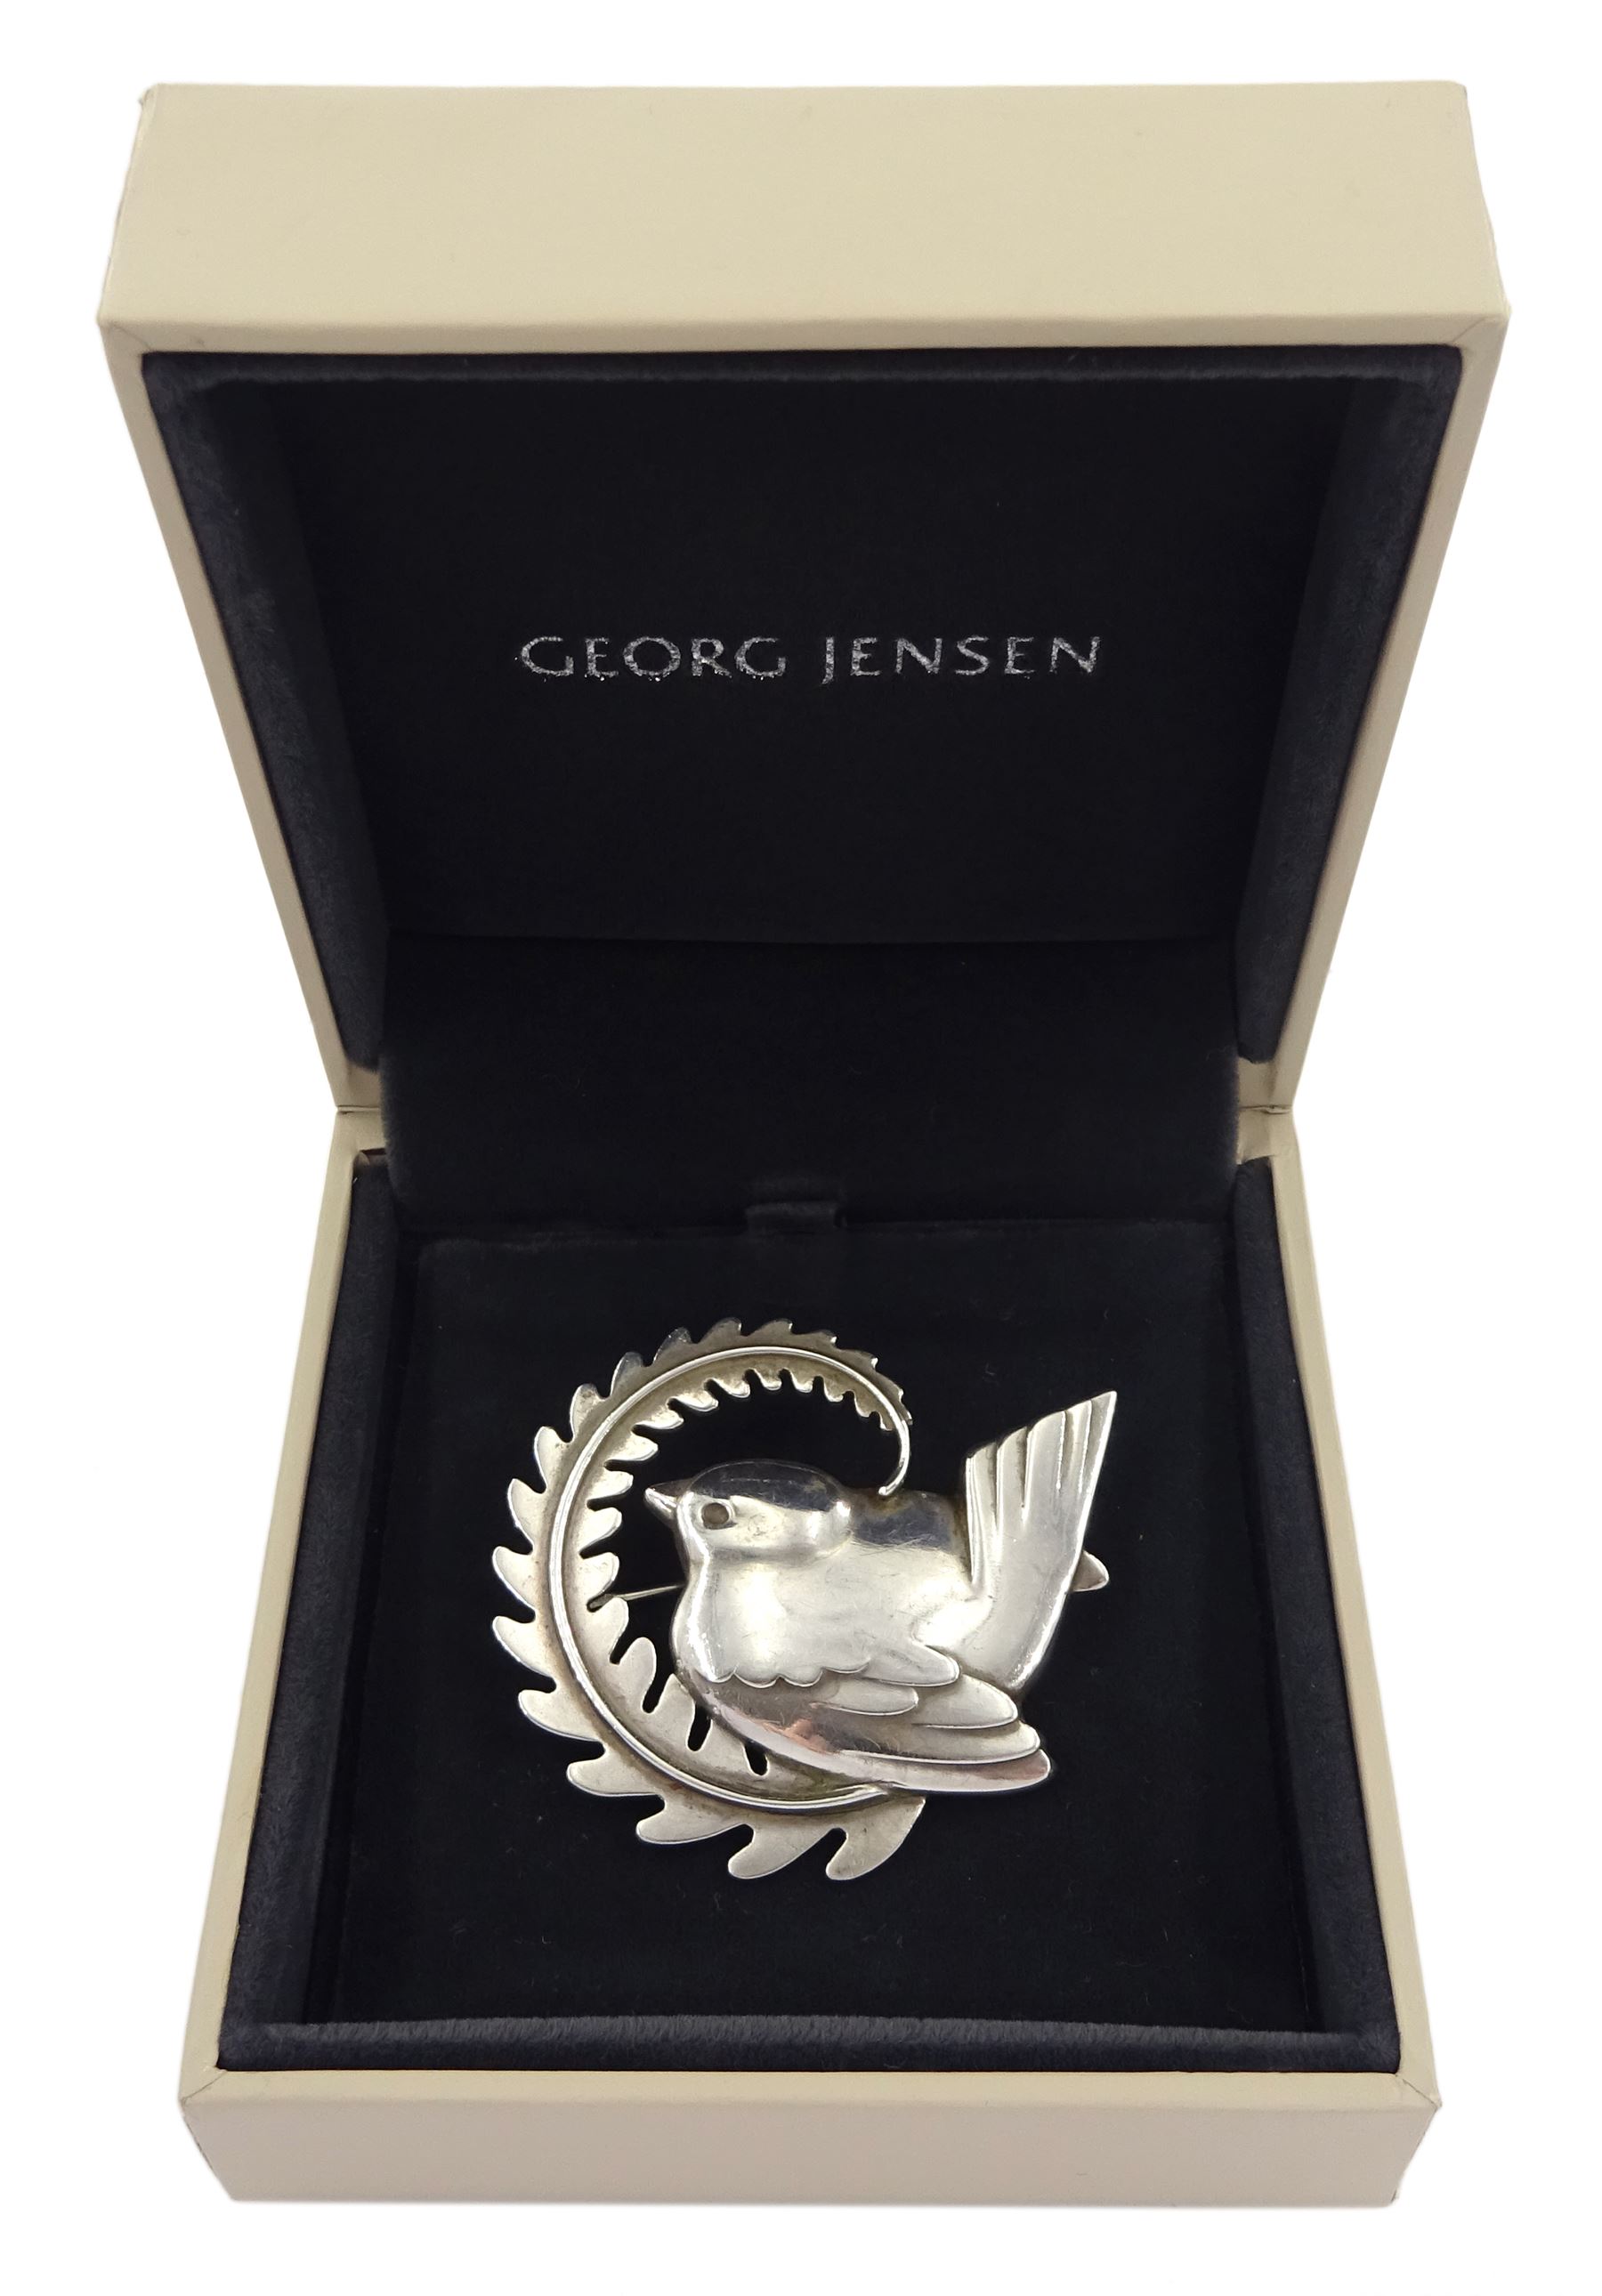 Georg Jensen silver bird and fern brooch - Image 2 of 4